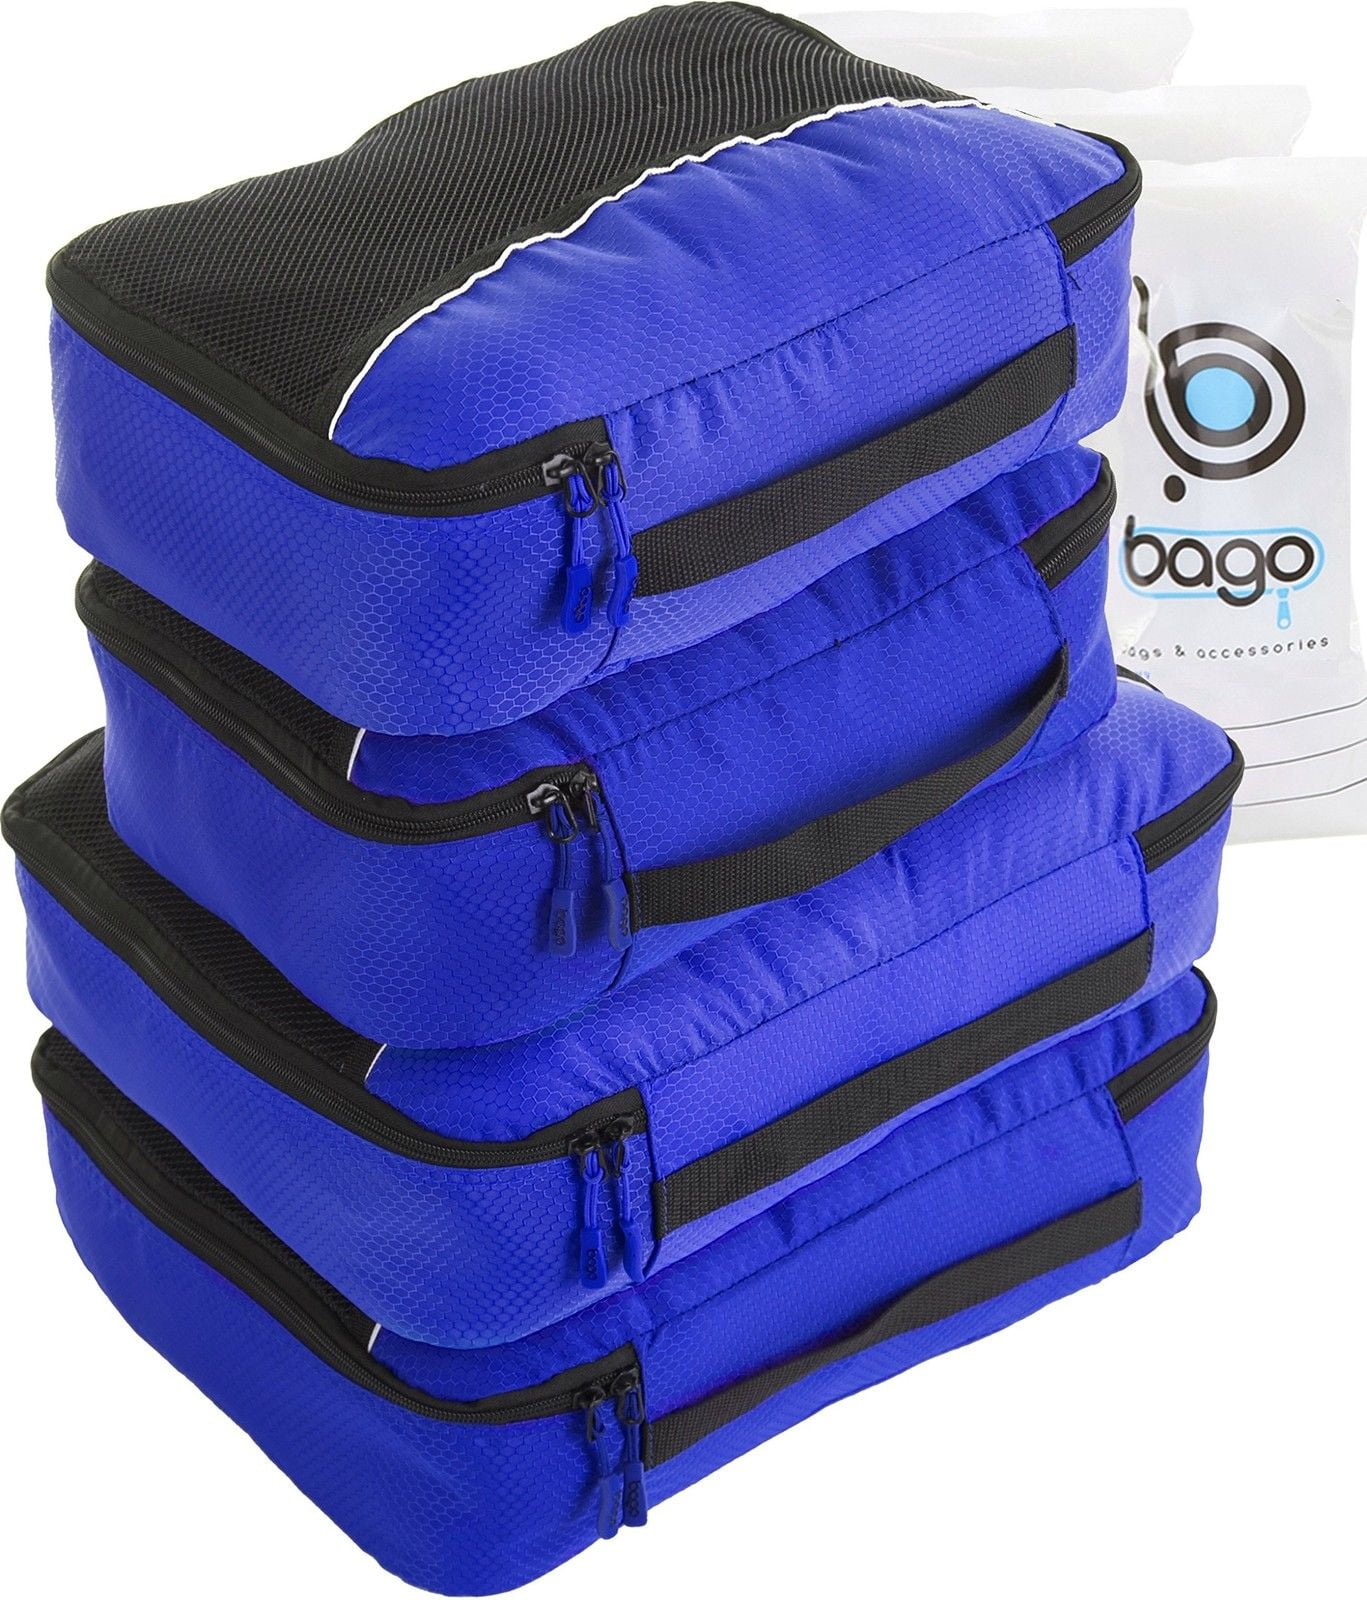 i Christmas Dog 3 Set Packing Cubes,2 Various Sizes Travel Luggage Packing Organizers